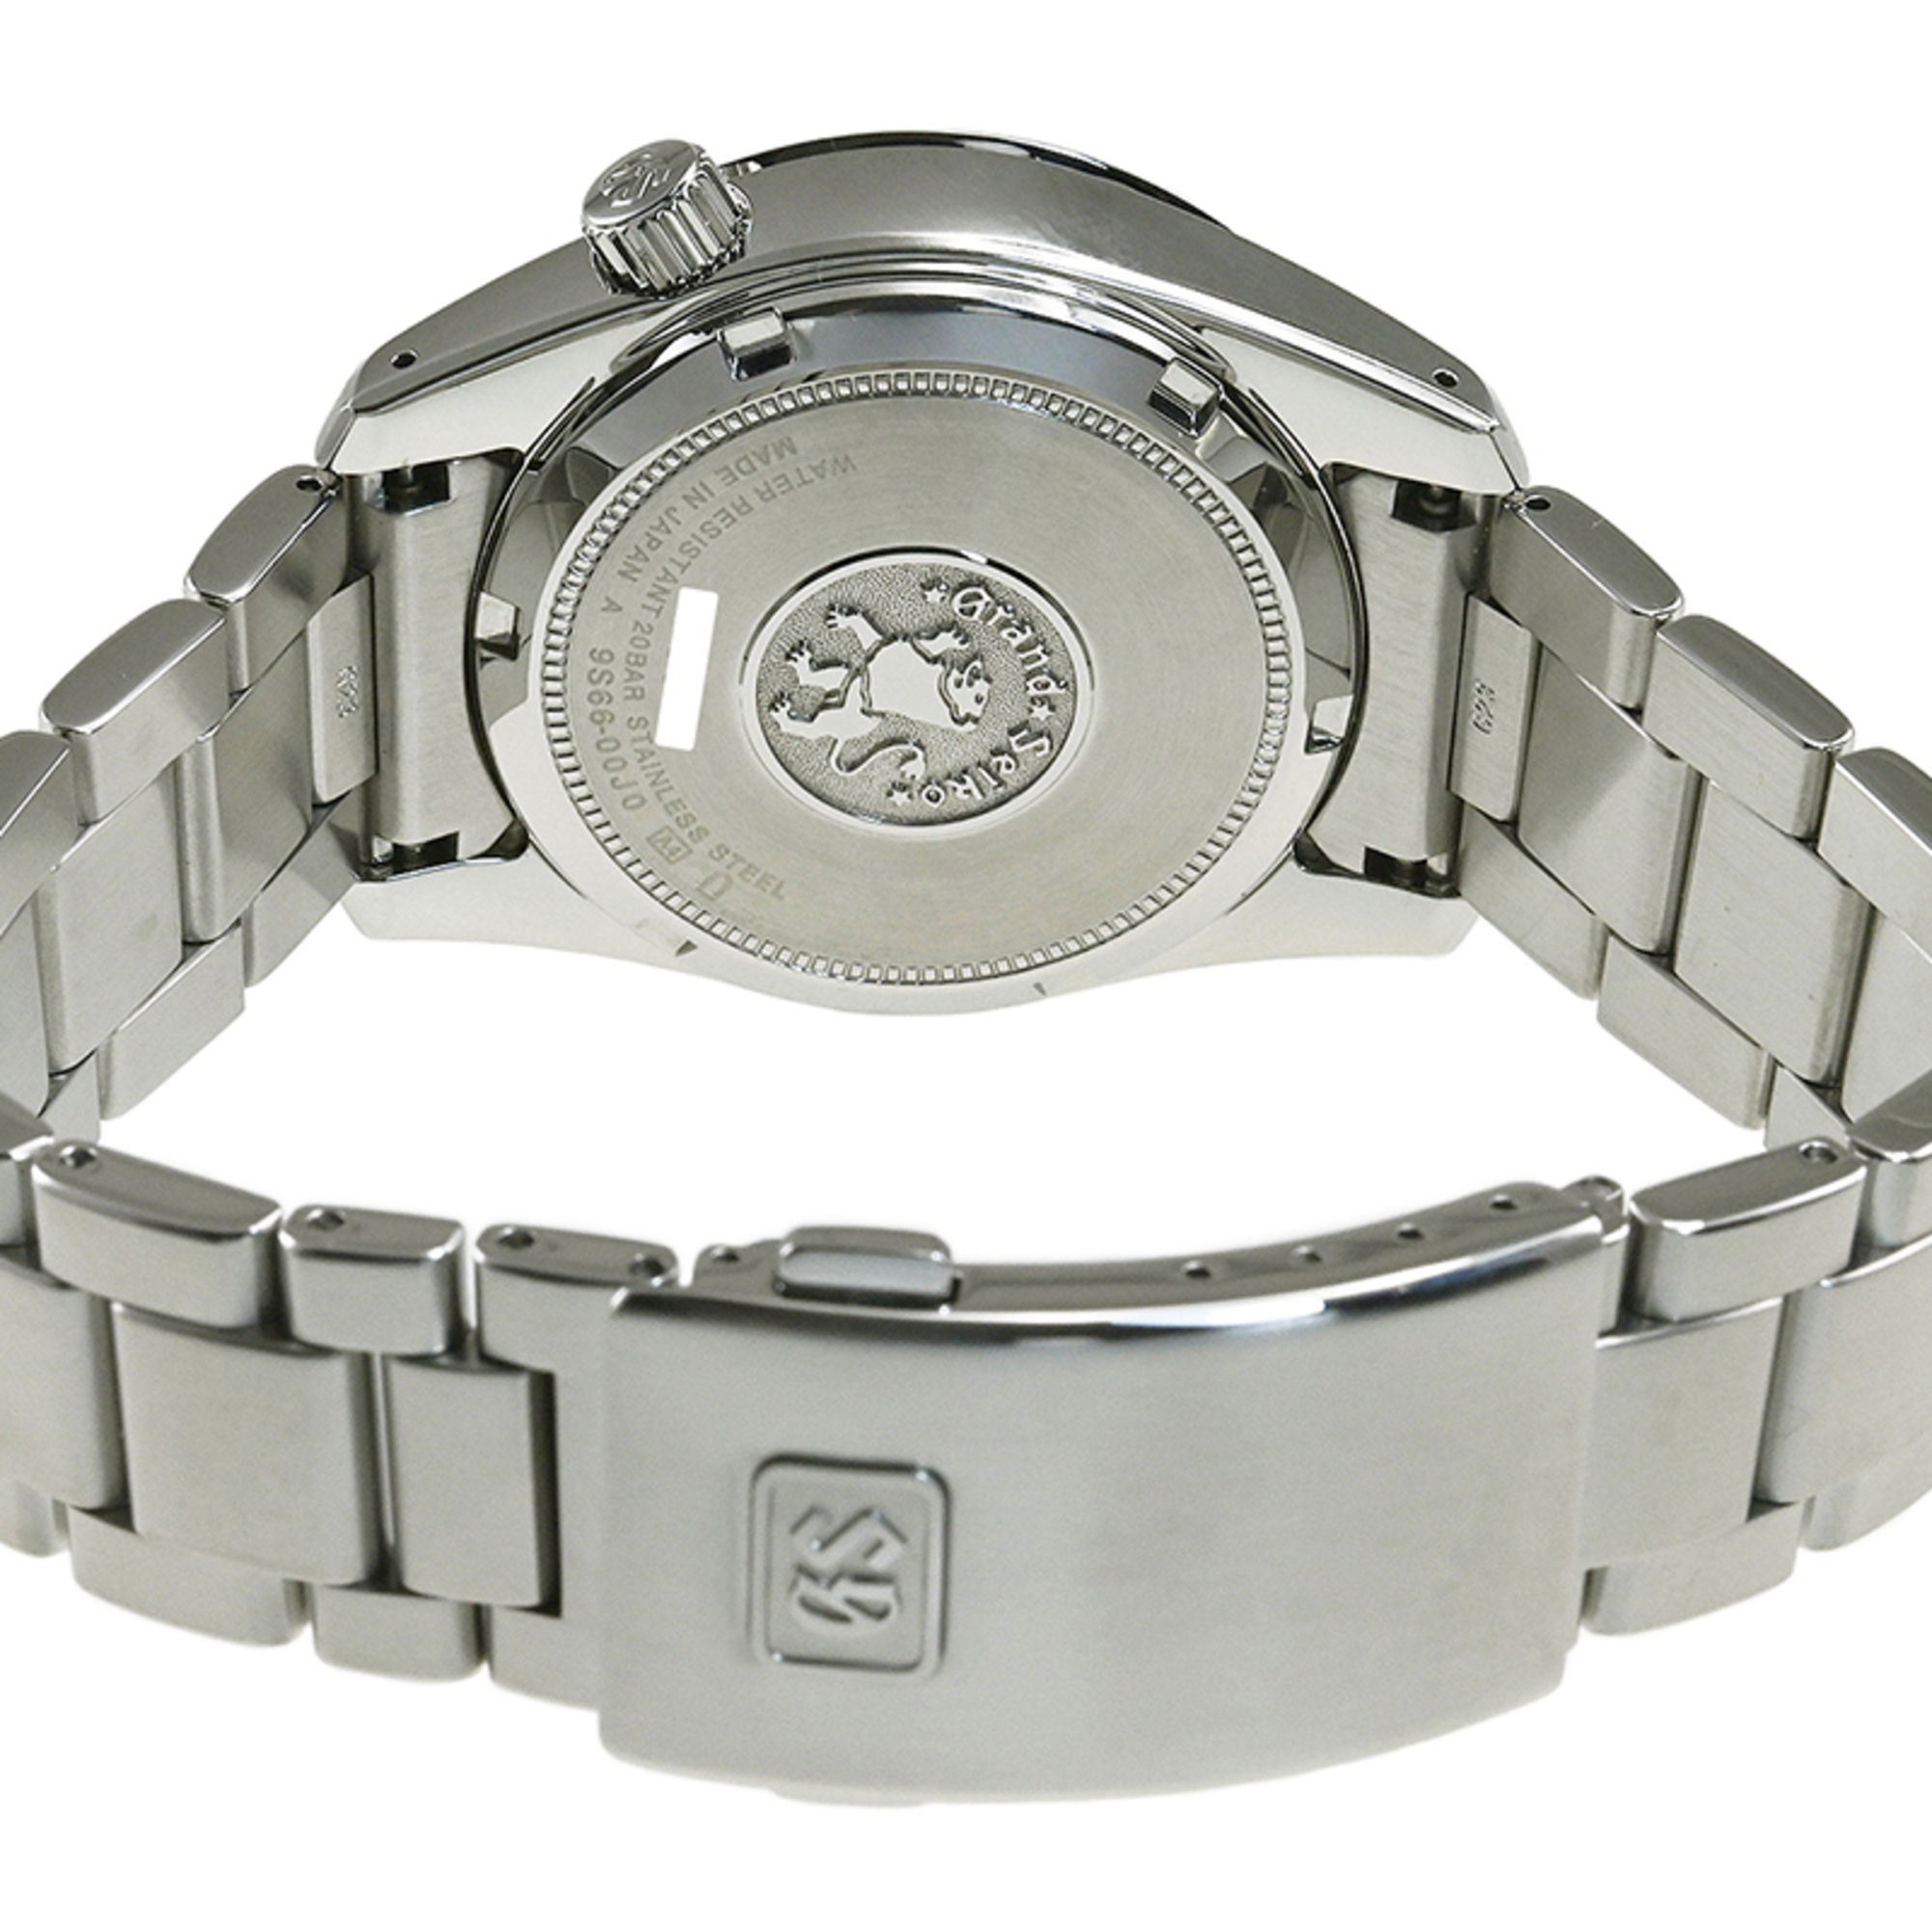 SEIKO Grand Seiko Sports Collection 9S Mechanical GMT Watch SBGM245G